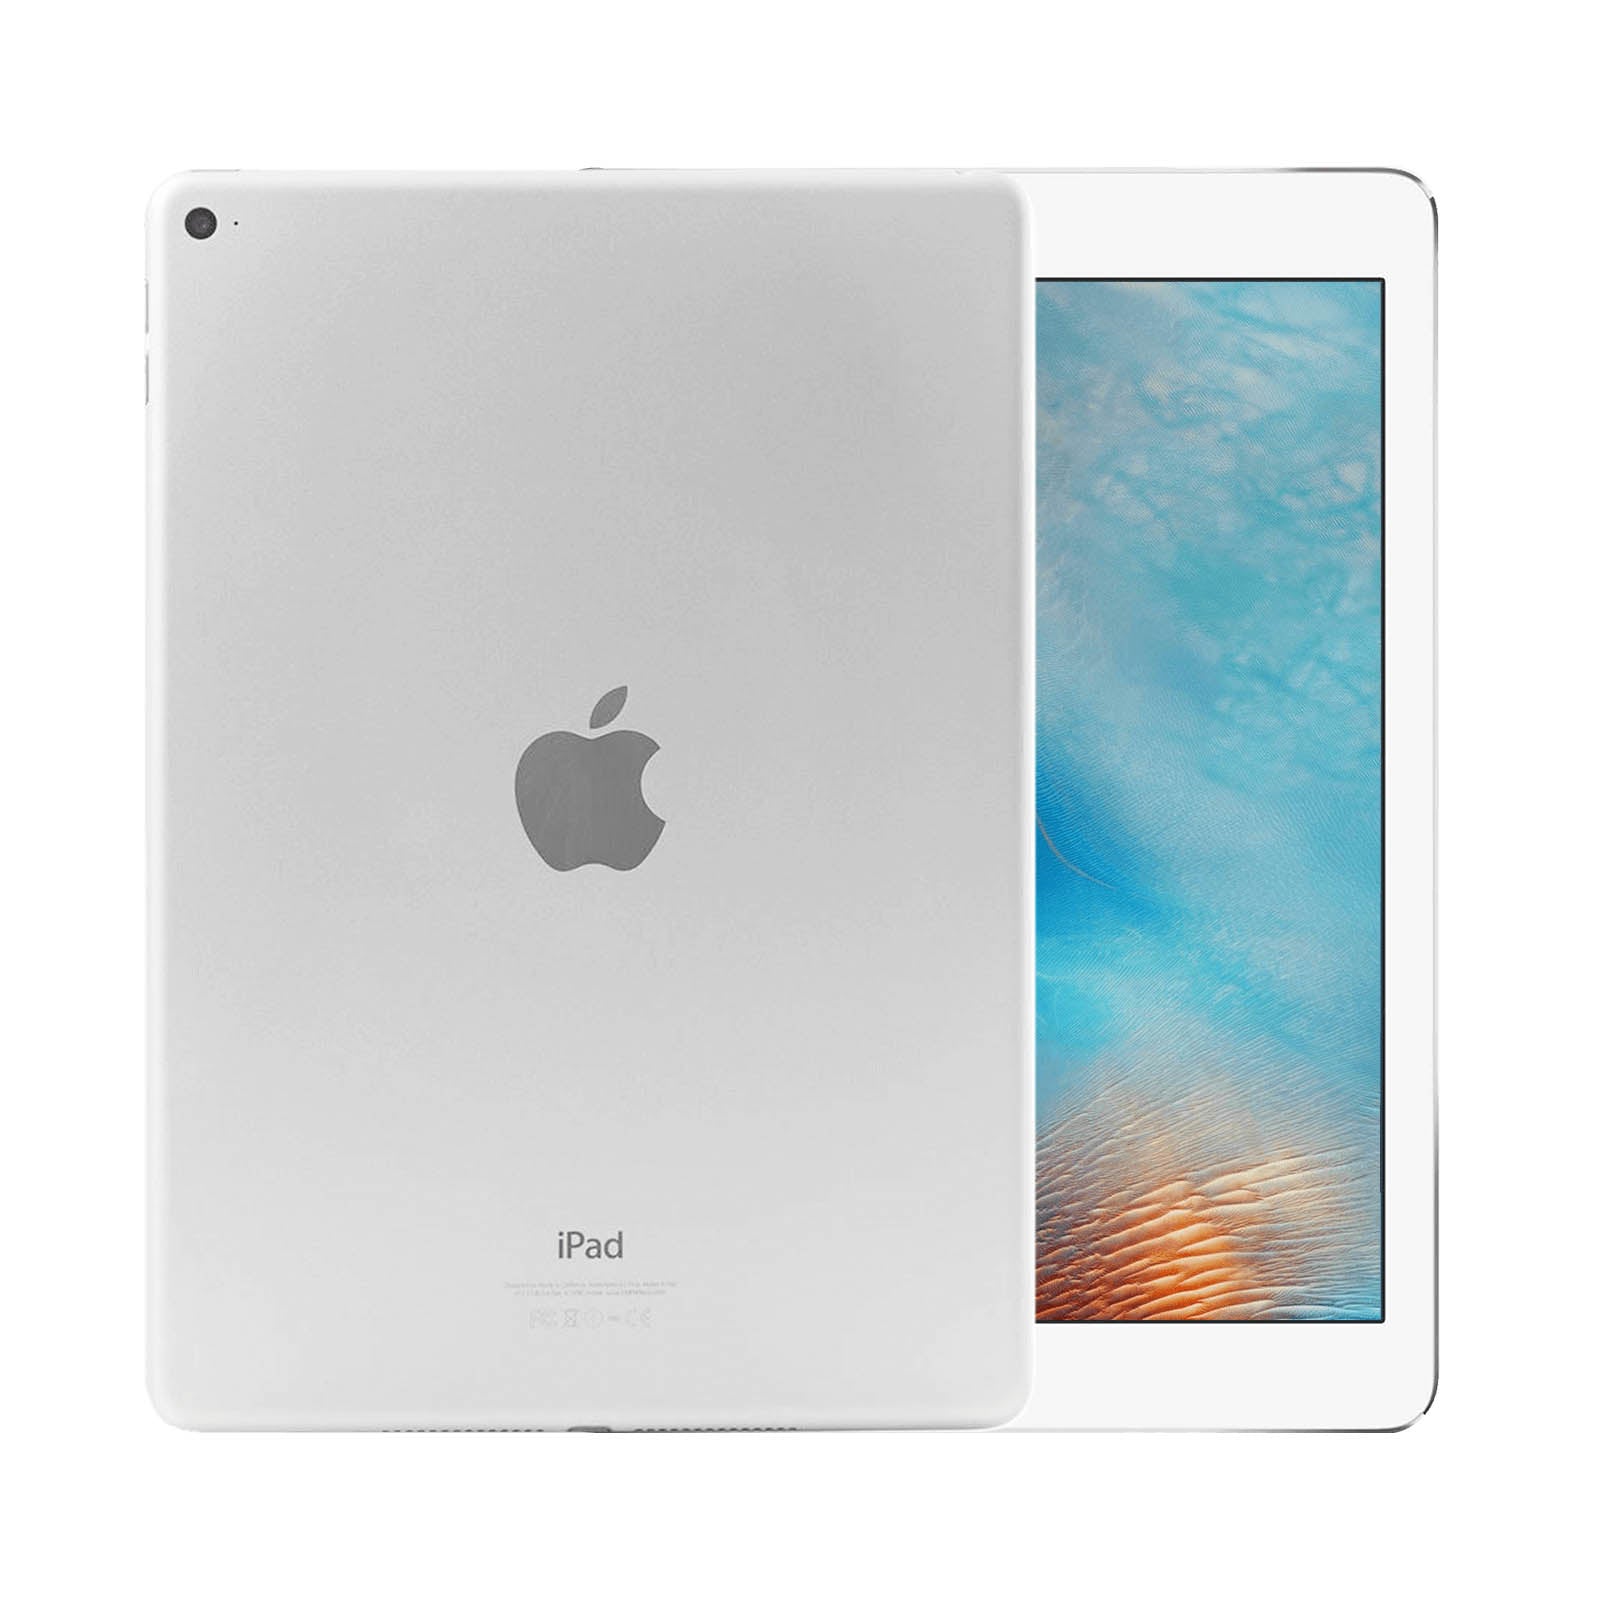 Ristrutturatoished Apple iPad Air 2 64GB WiFi Argento Come Nuovo